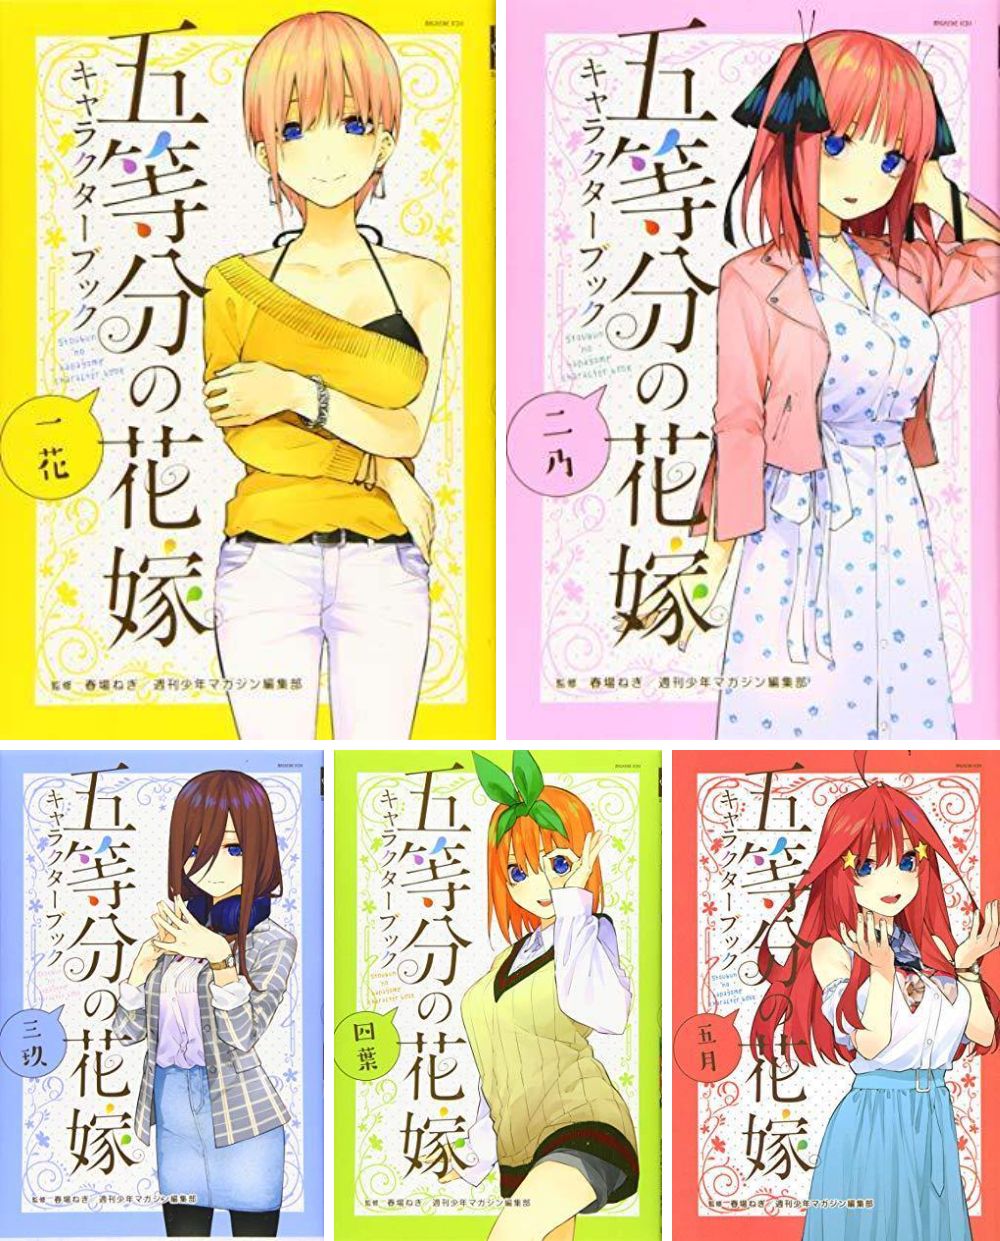 USED F/S GoToubun no Hanayome Series Character Book 5 Set Japanese